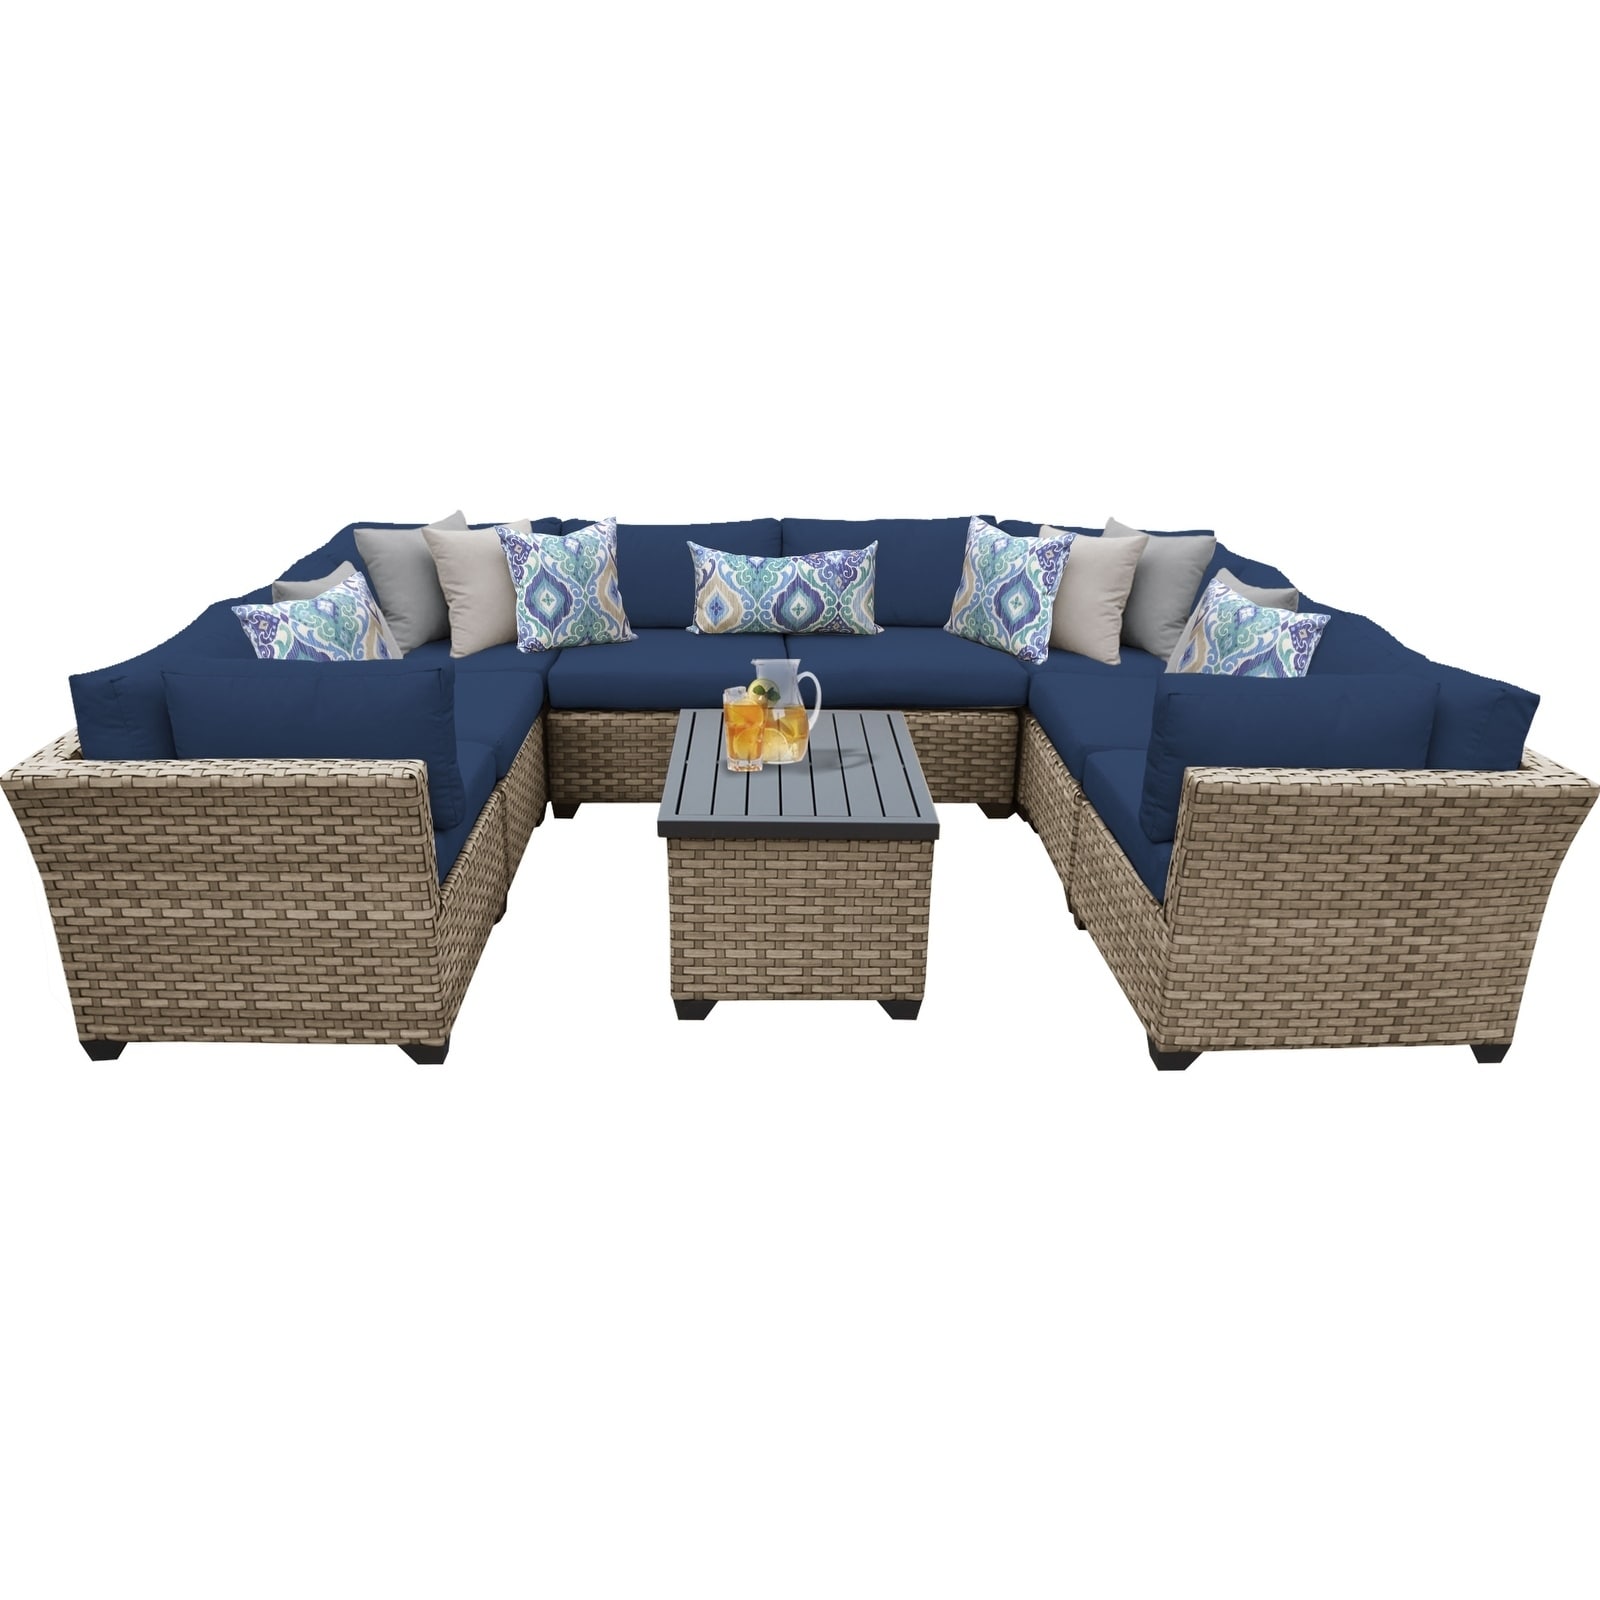 Monterey 9 Piece Outdoor Wicker Patio Furniture Set